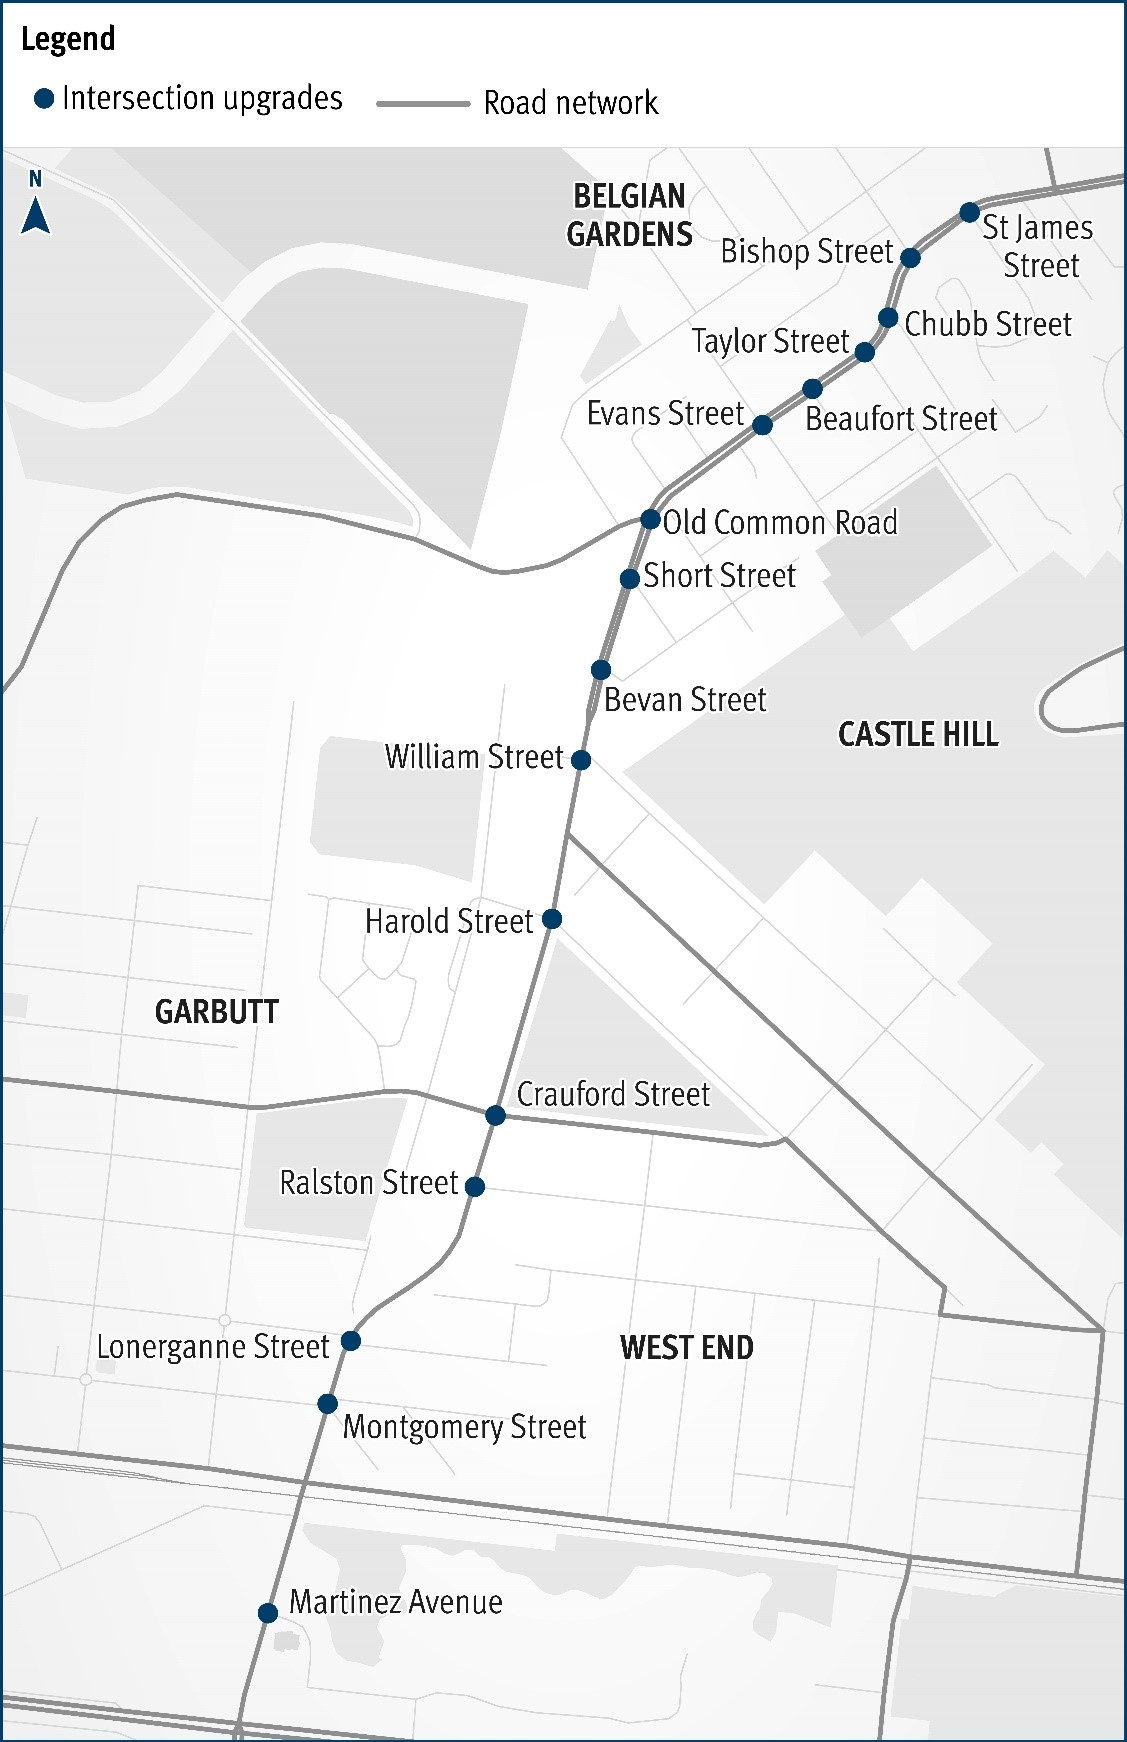 North Ward Road project map